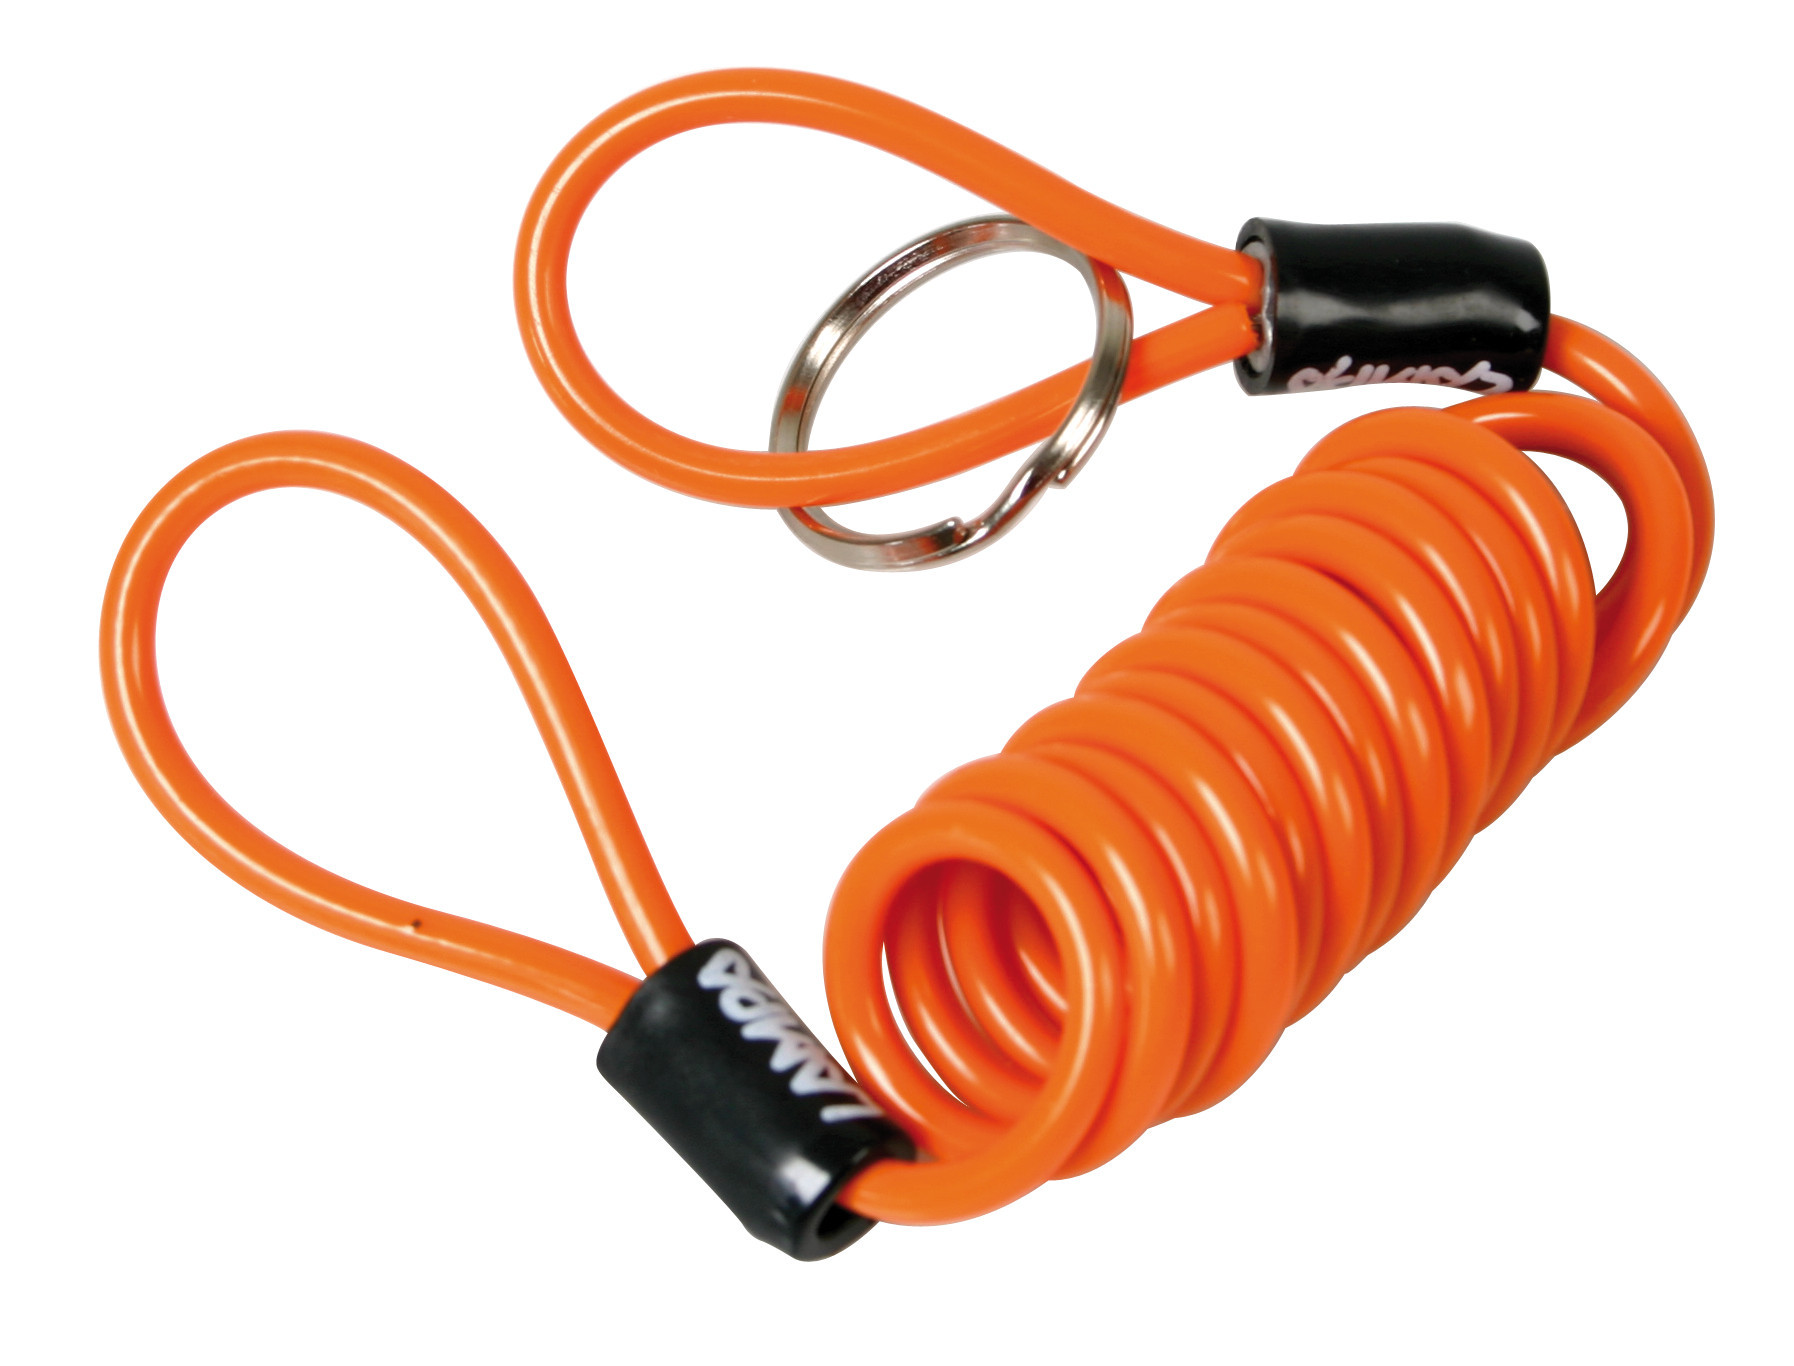 Cablu spiralat din otel Safety Reminder - 150cm - Portocaliu Garage AutoRide